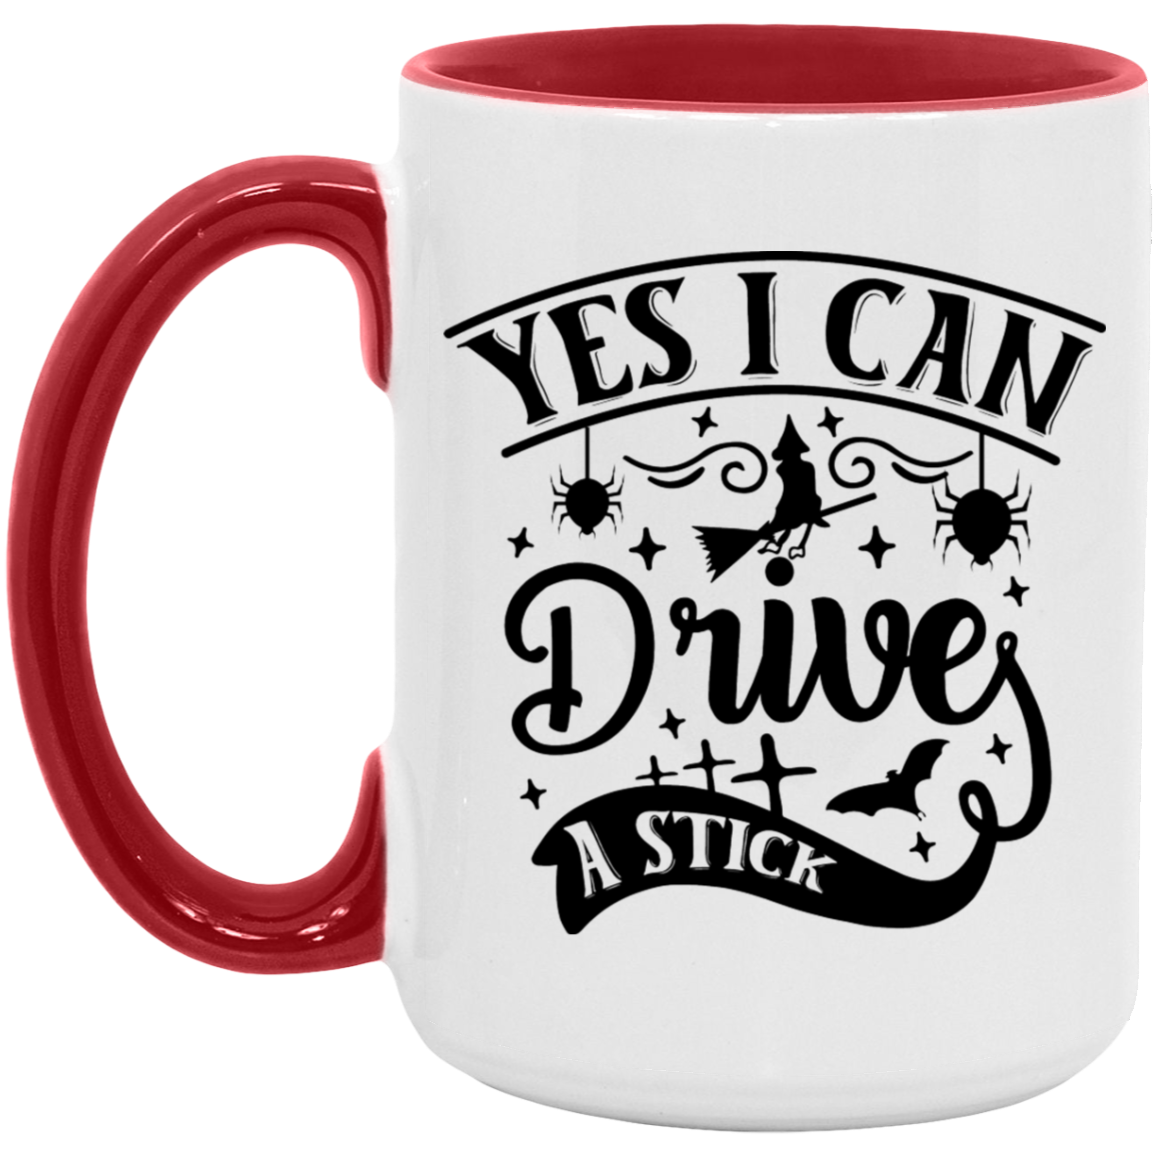 Yes I Can Drive A Stick - Mugs